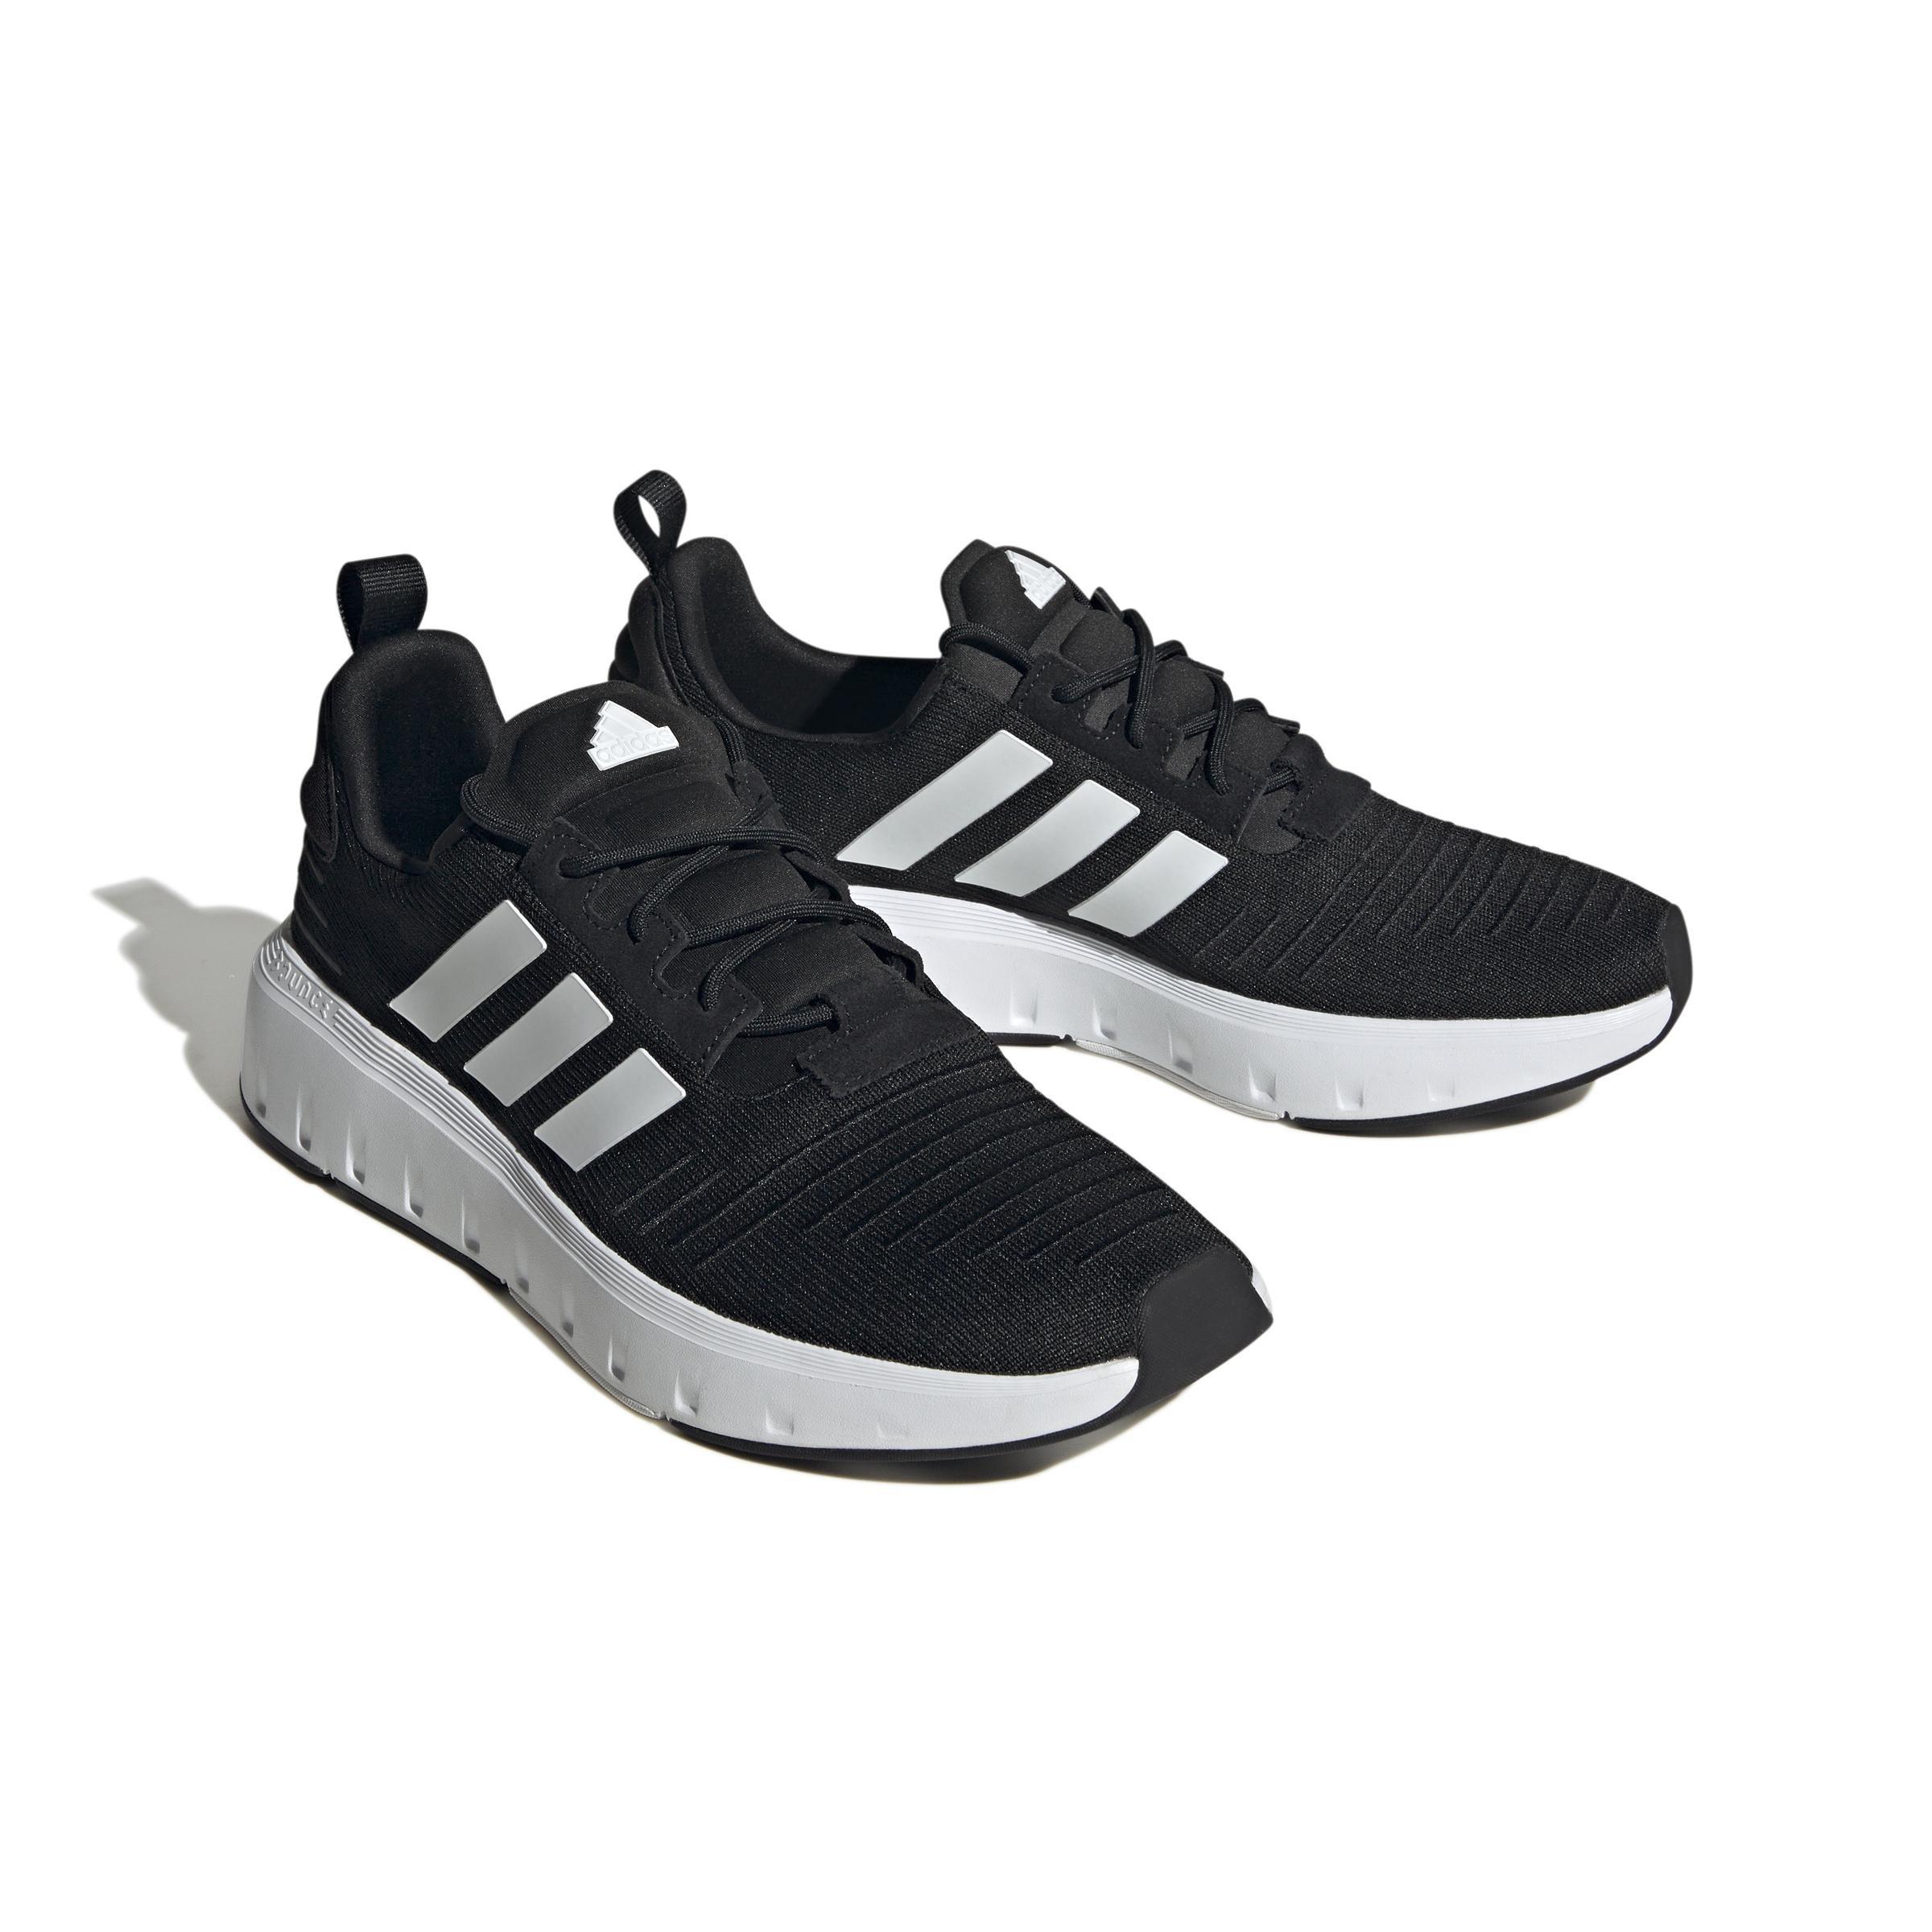 adidas - Men Swift Run Shoes, Black